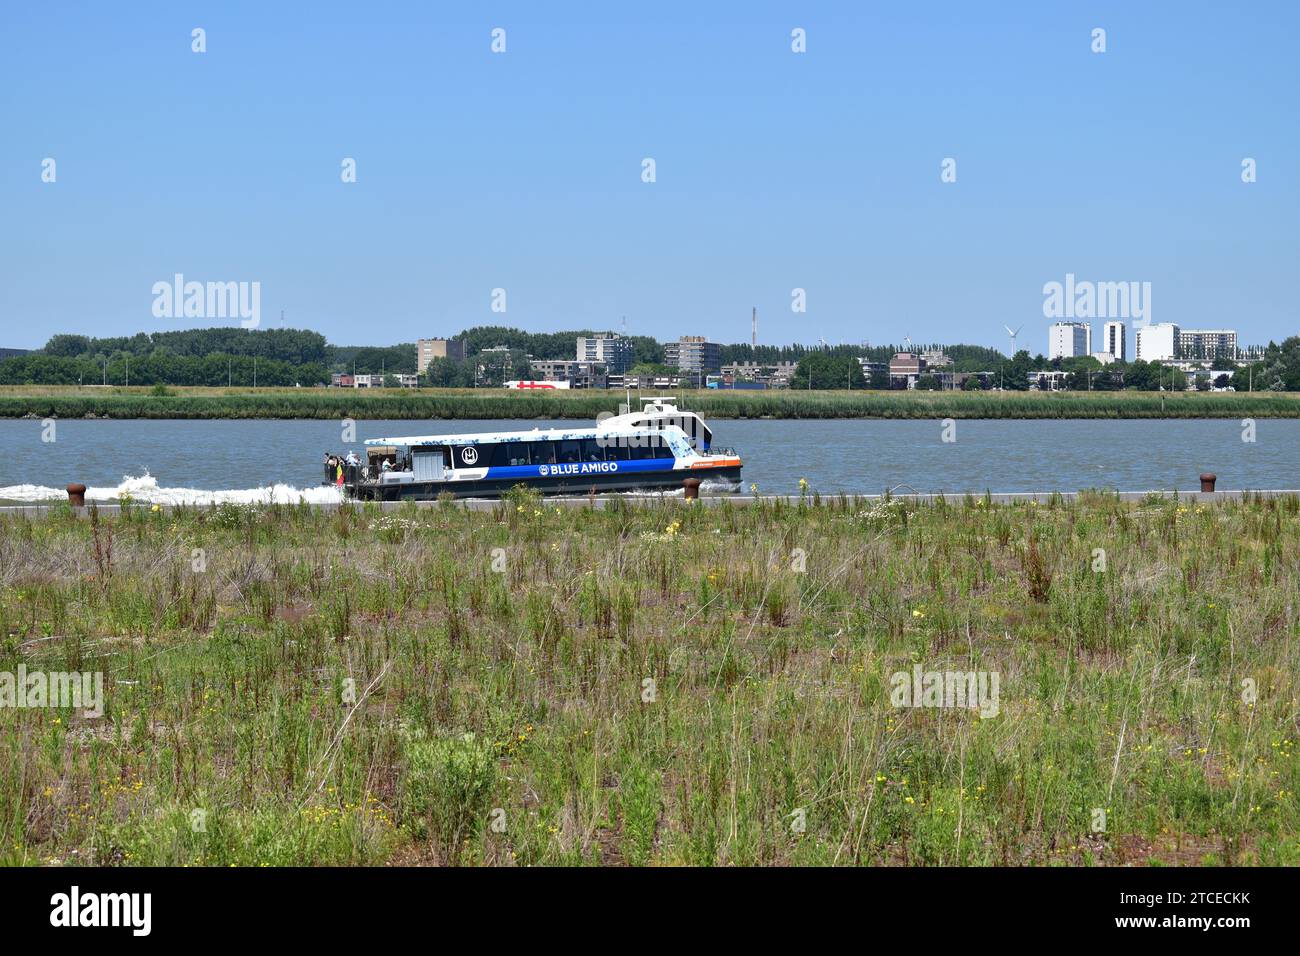 'Waterbus' boat of the Blue Amigo company providing public transport on the Schelde river in Antwerp Stock Photo